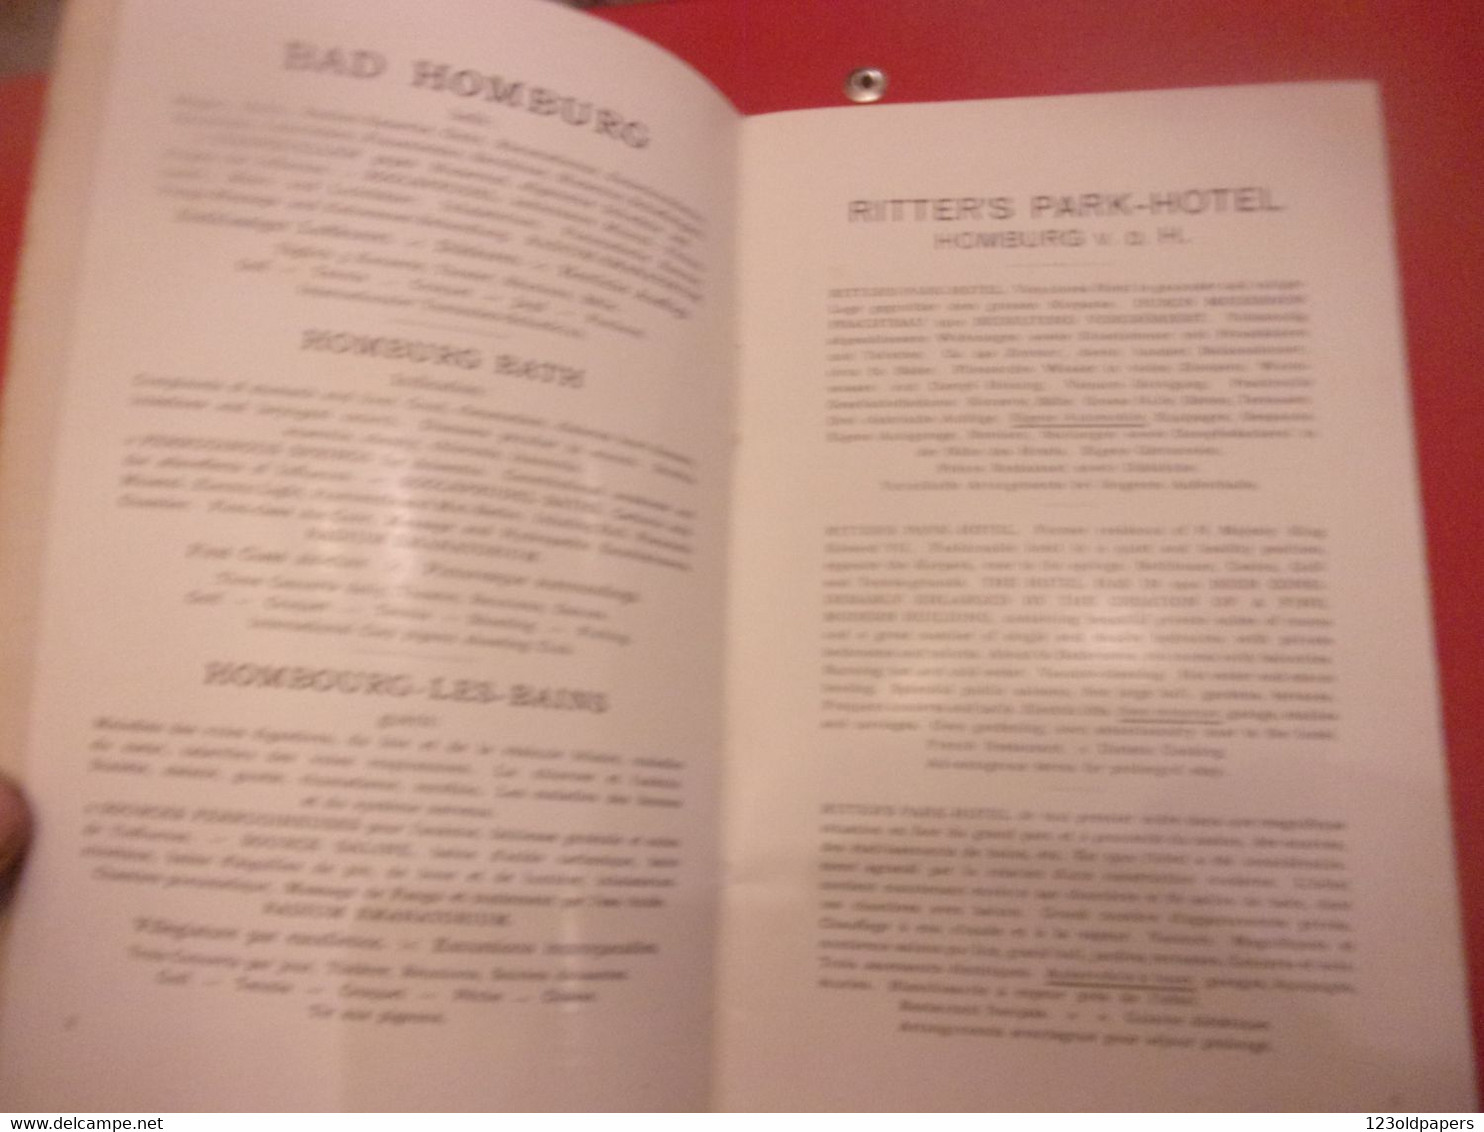 ♥️ BAD HOMBURG RITTER S PARK HOTEL HOMBOURG LES BAINS 1910 24 PAGES PLAN - Alte Bücher